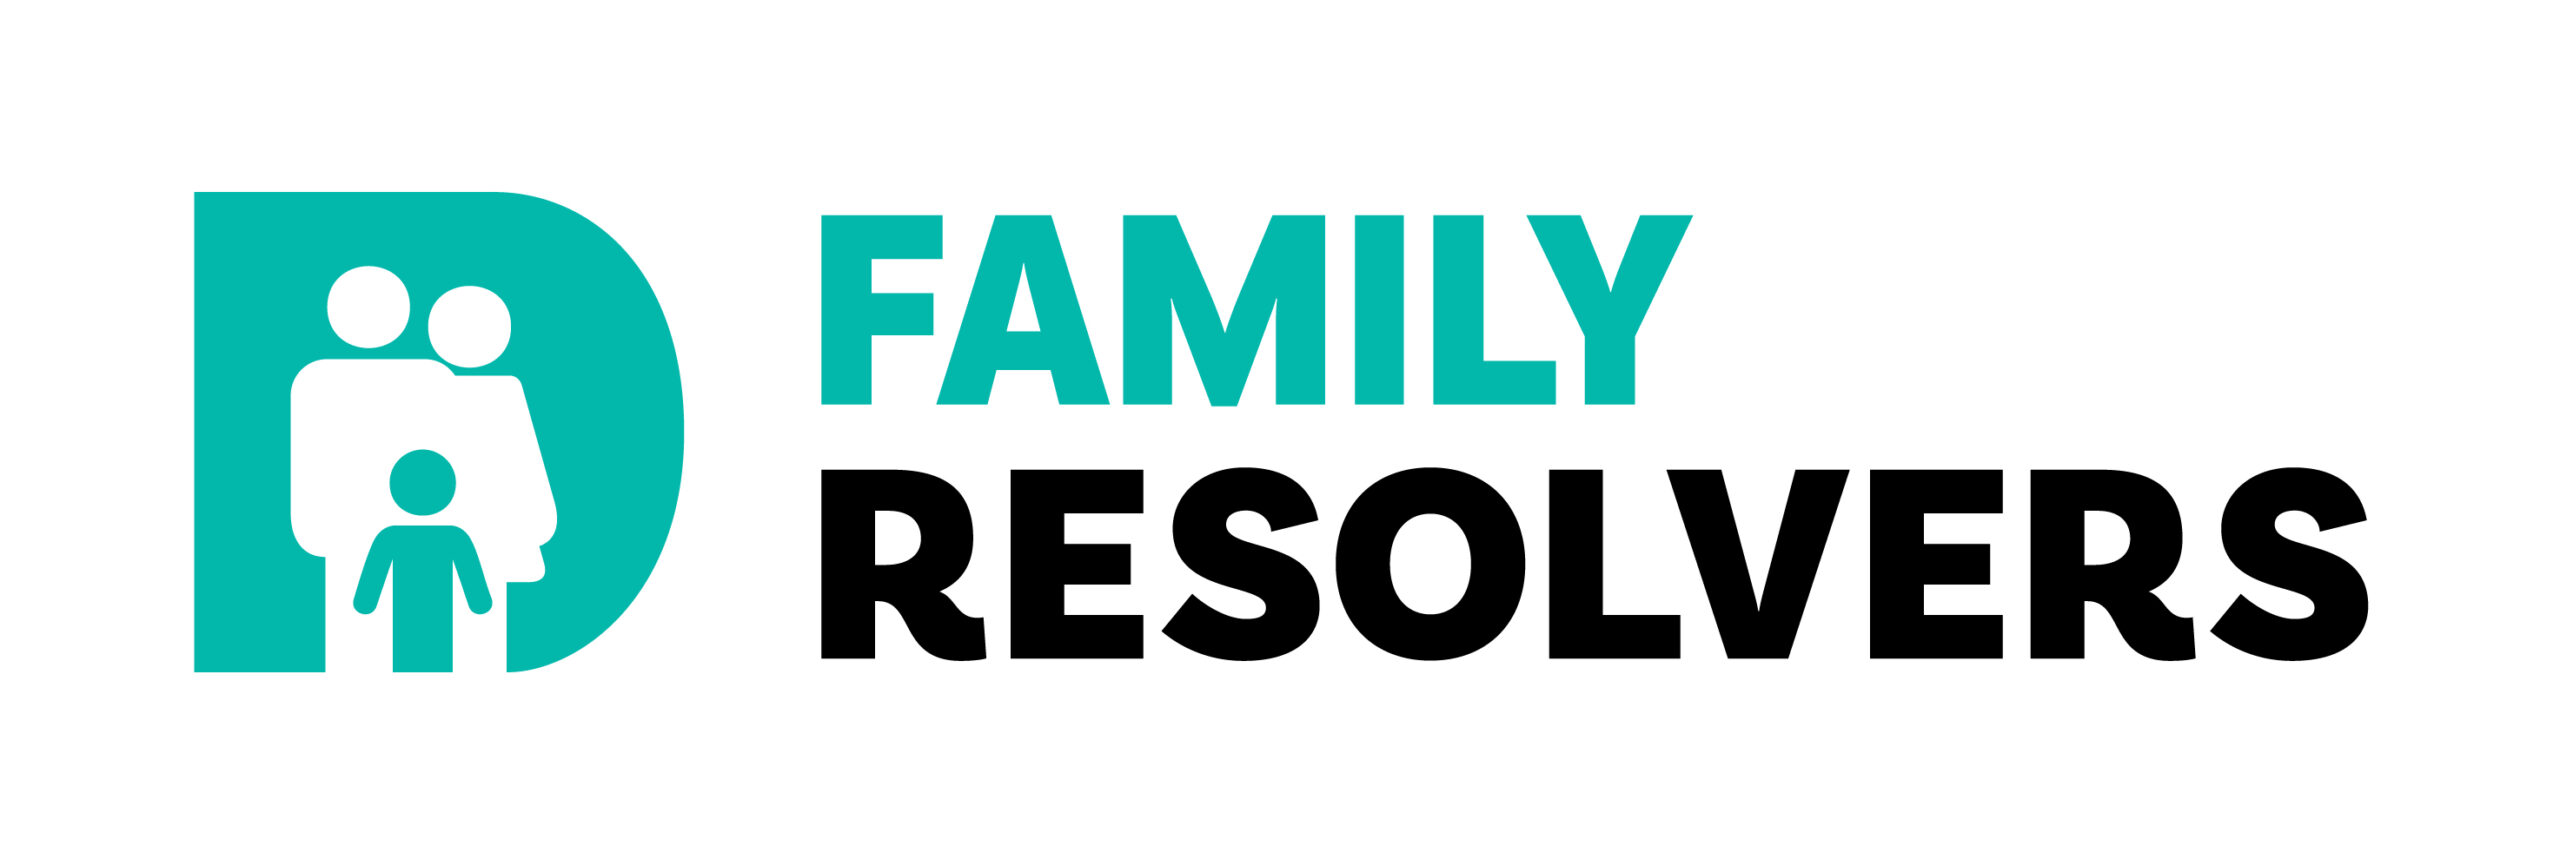 Family Resolver Logo